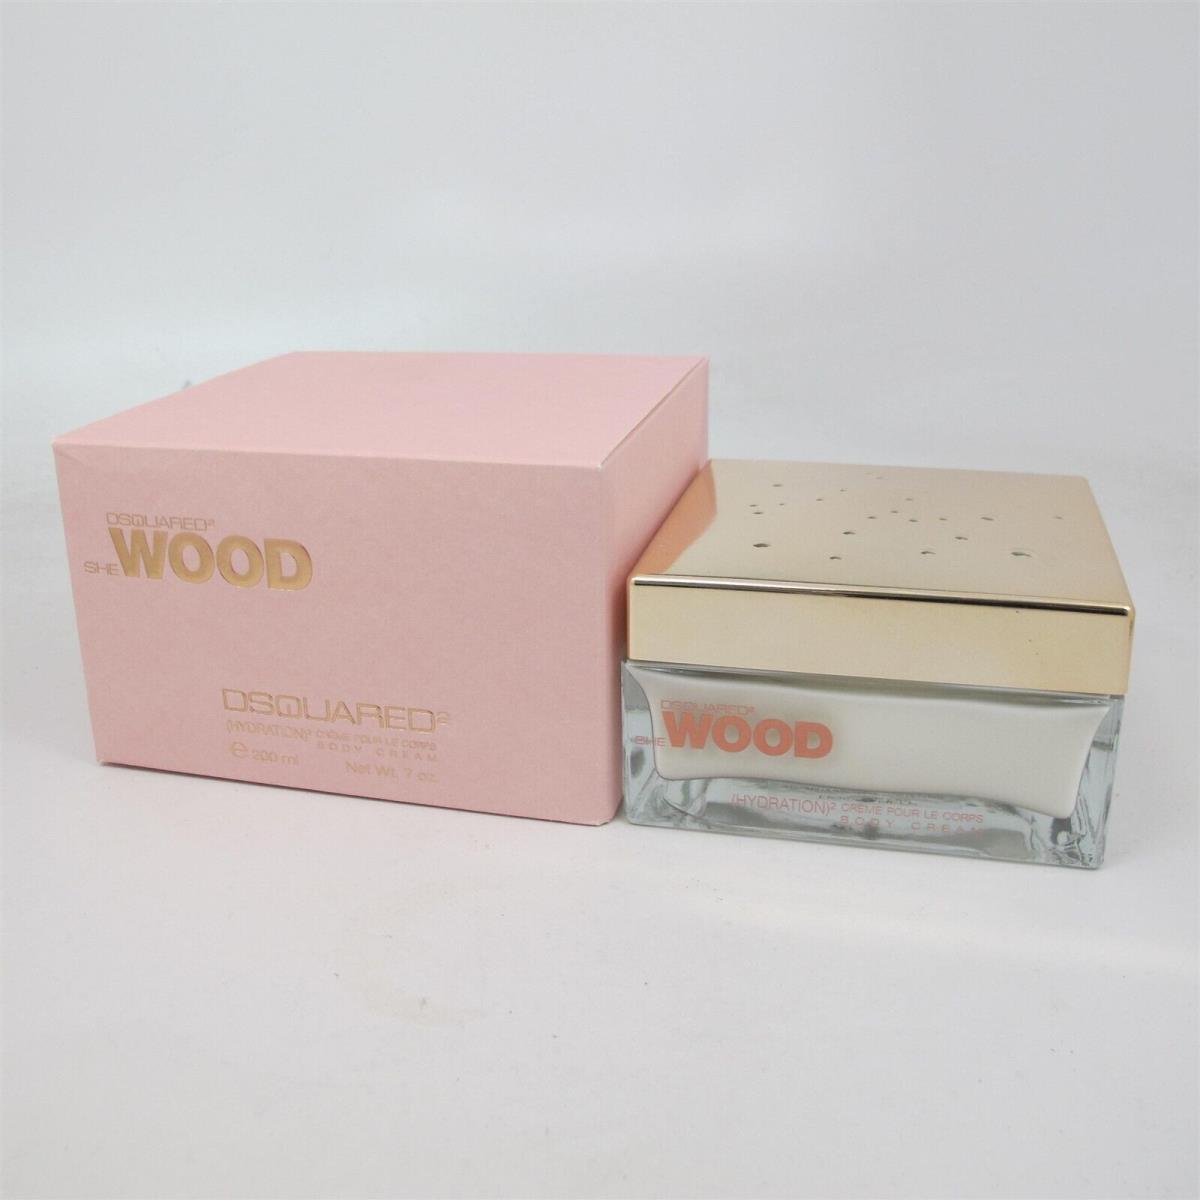 DSQUARED2 Shewood 200 Ml/ 7.0 oz Perfumed Body Cream